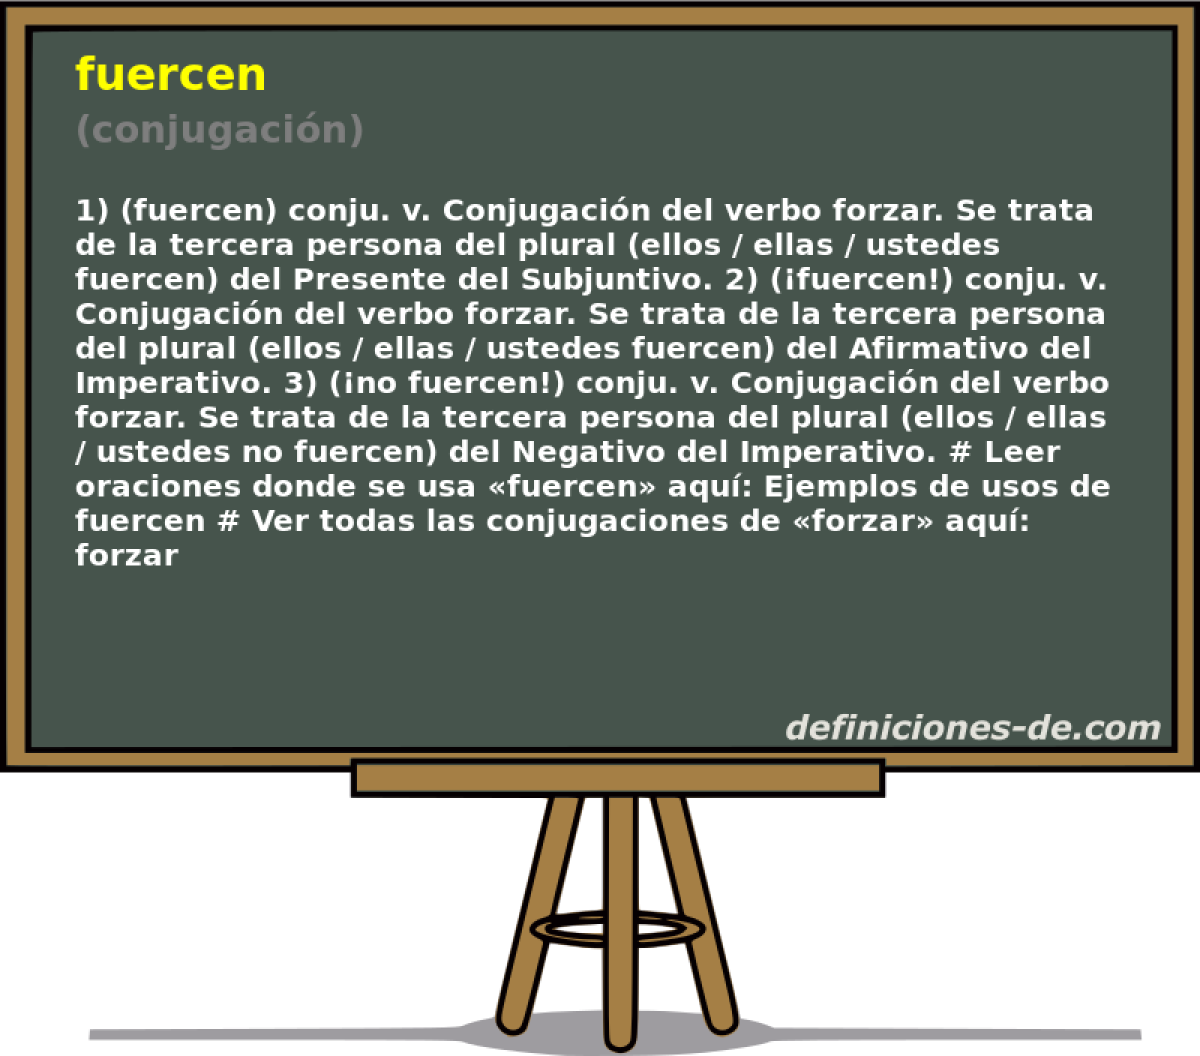 fuercen (conjugacin)